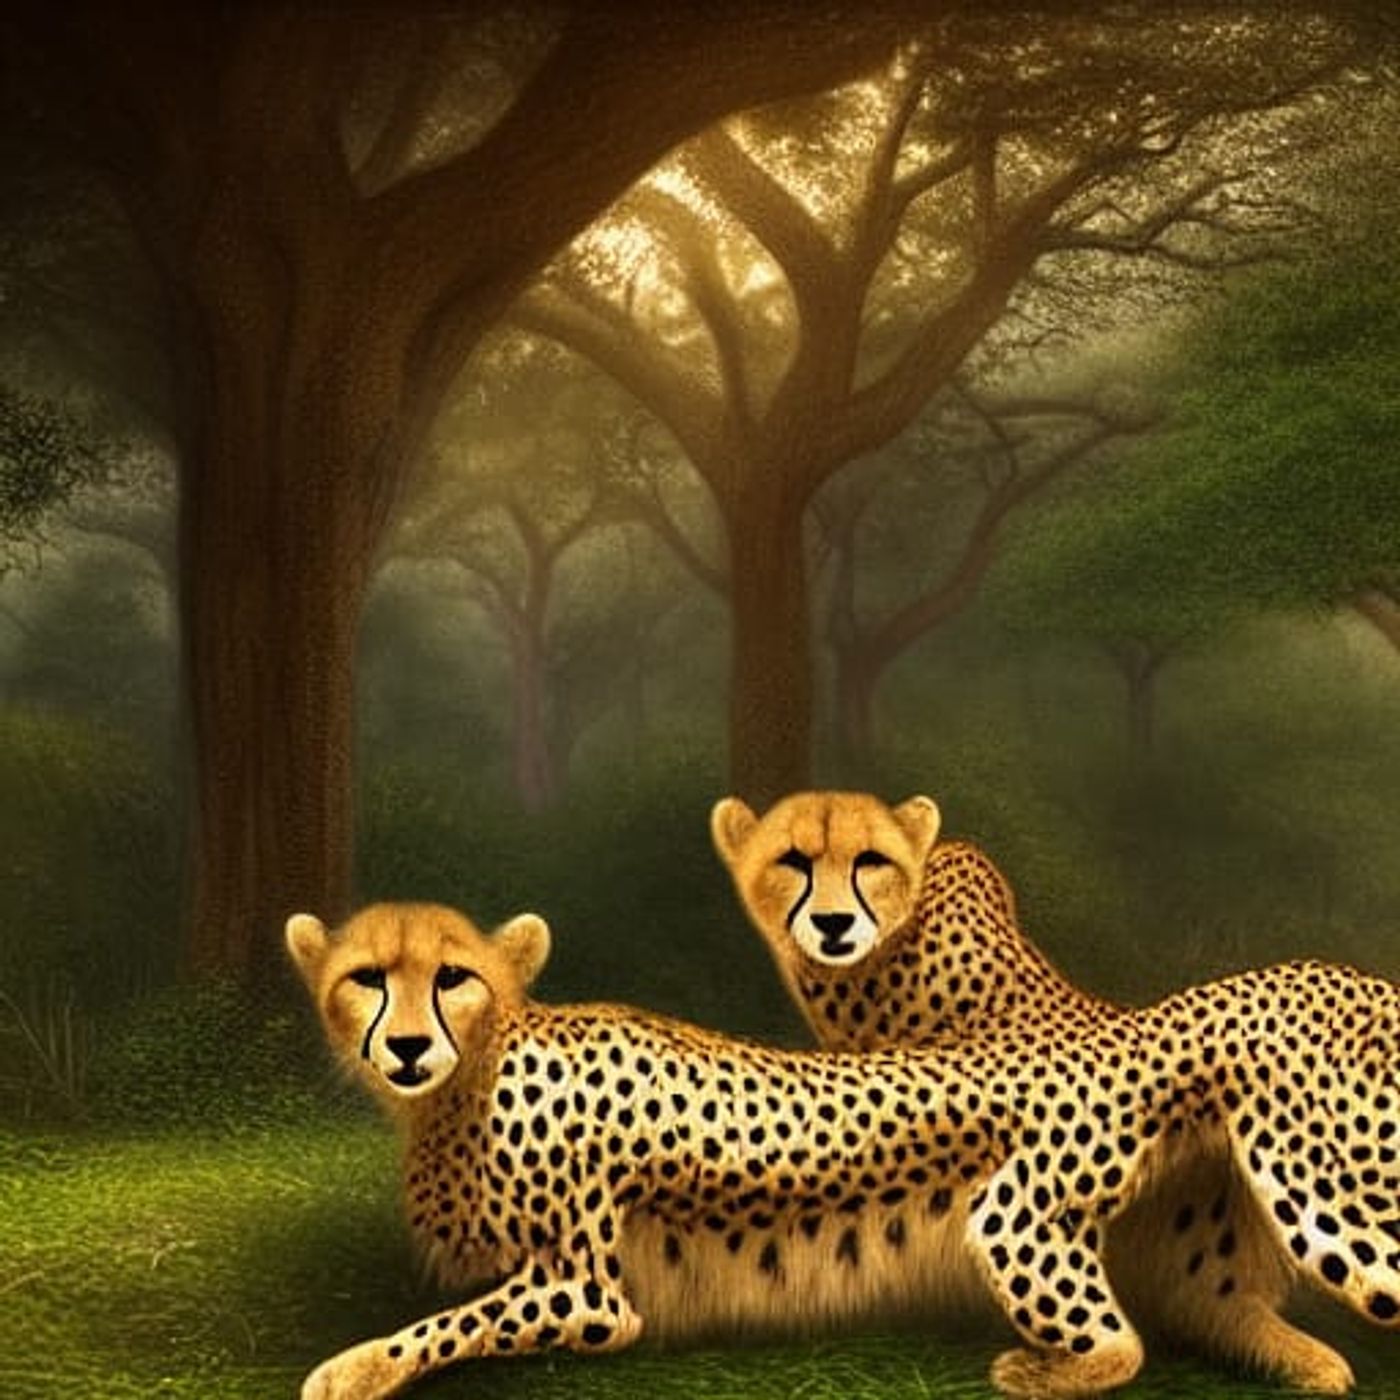 The Roar of The Cheetah